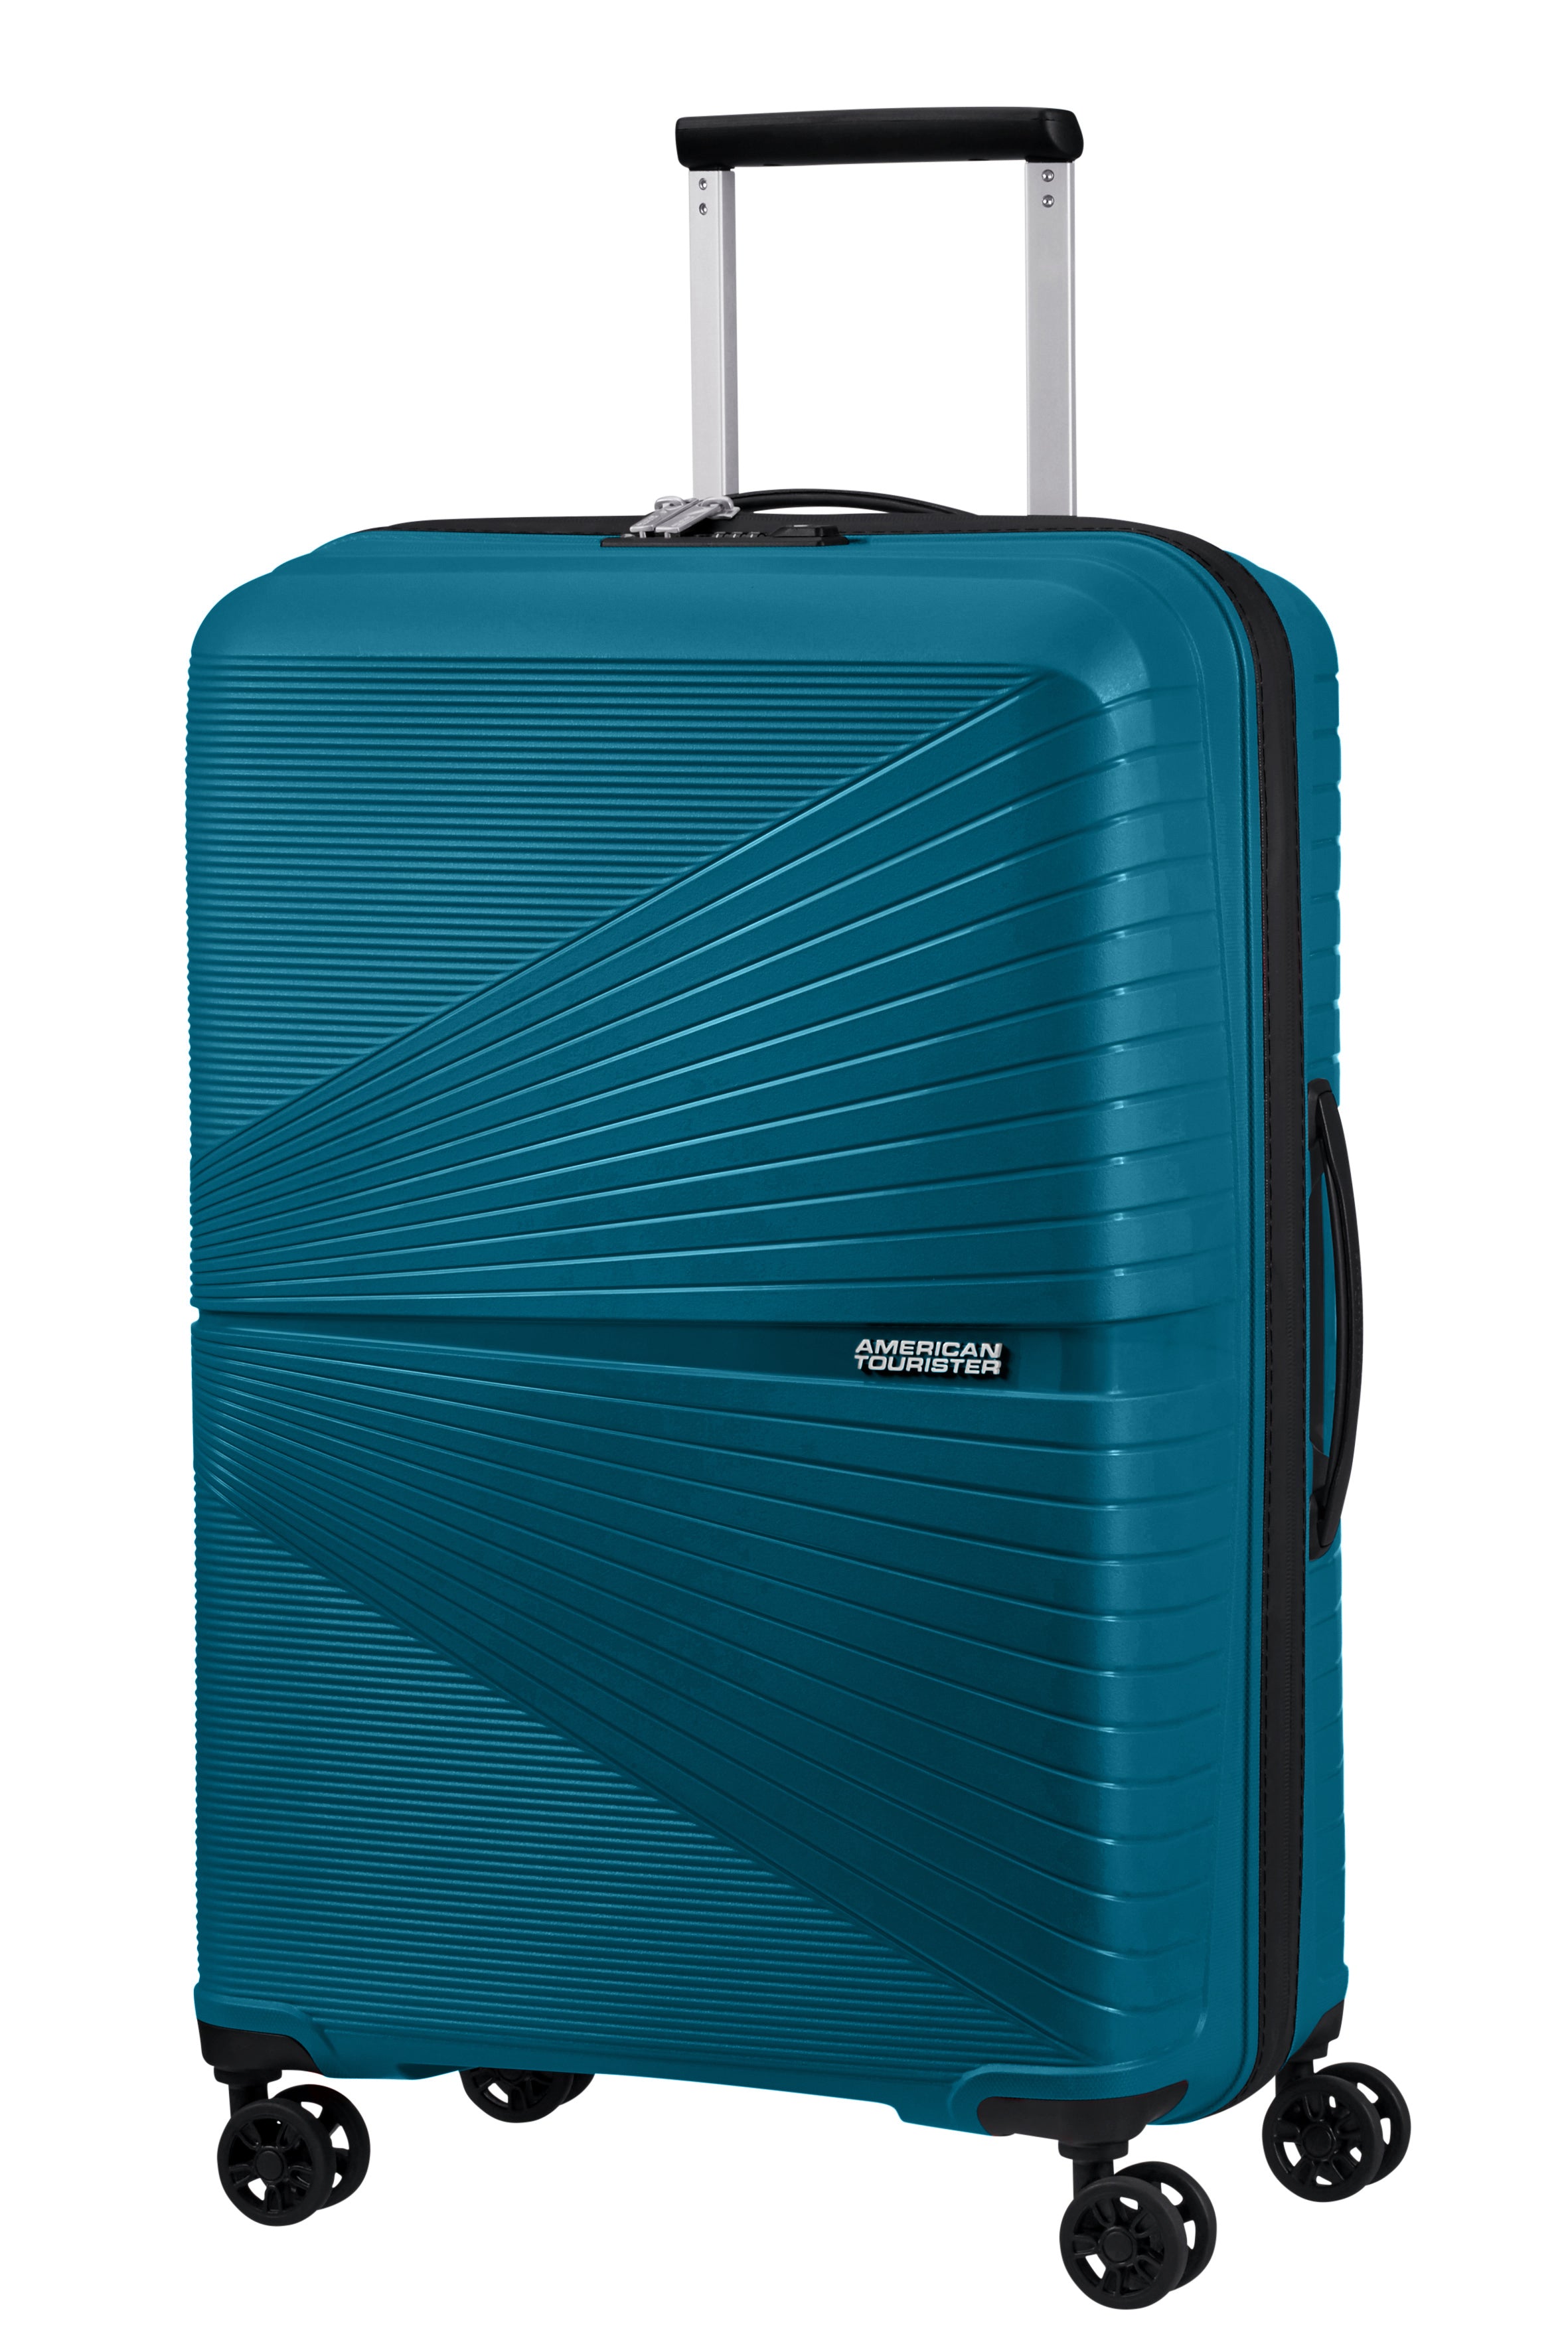 American Tourister - Airconic 67cm Medium Suitcase - Deep Ocean